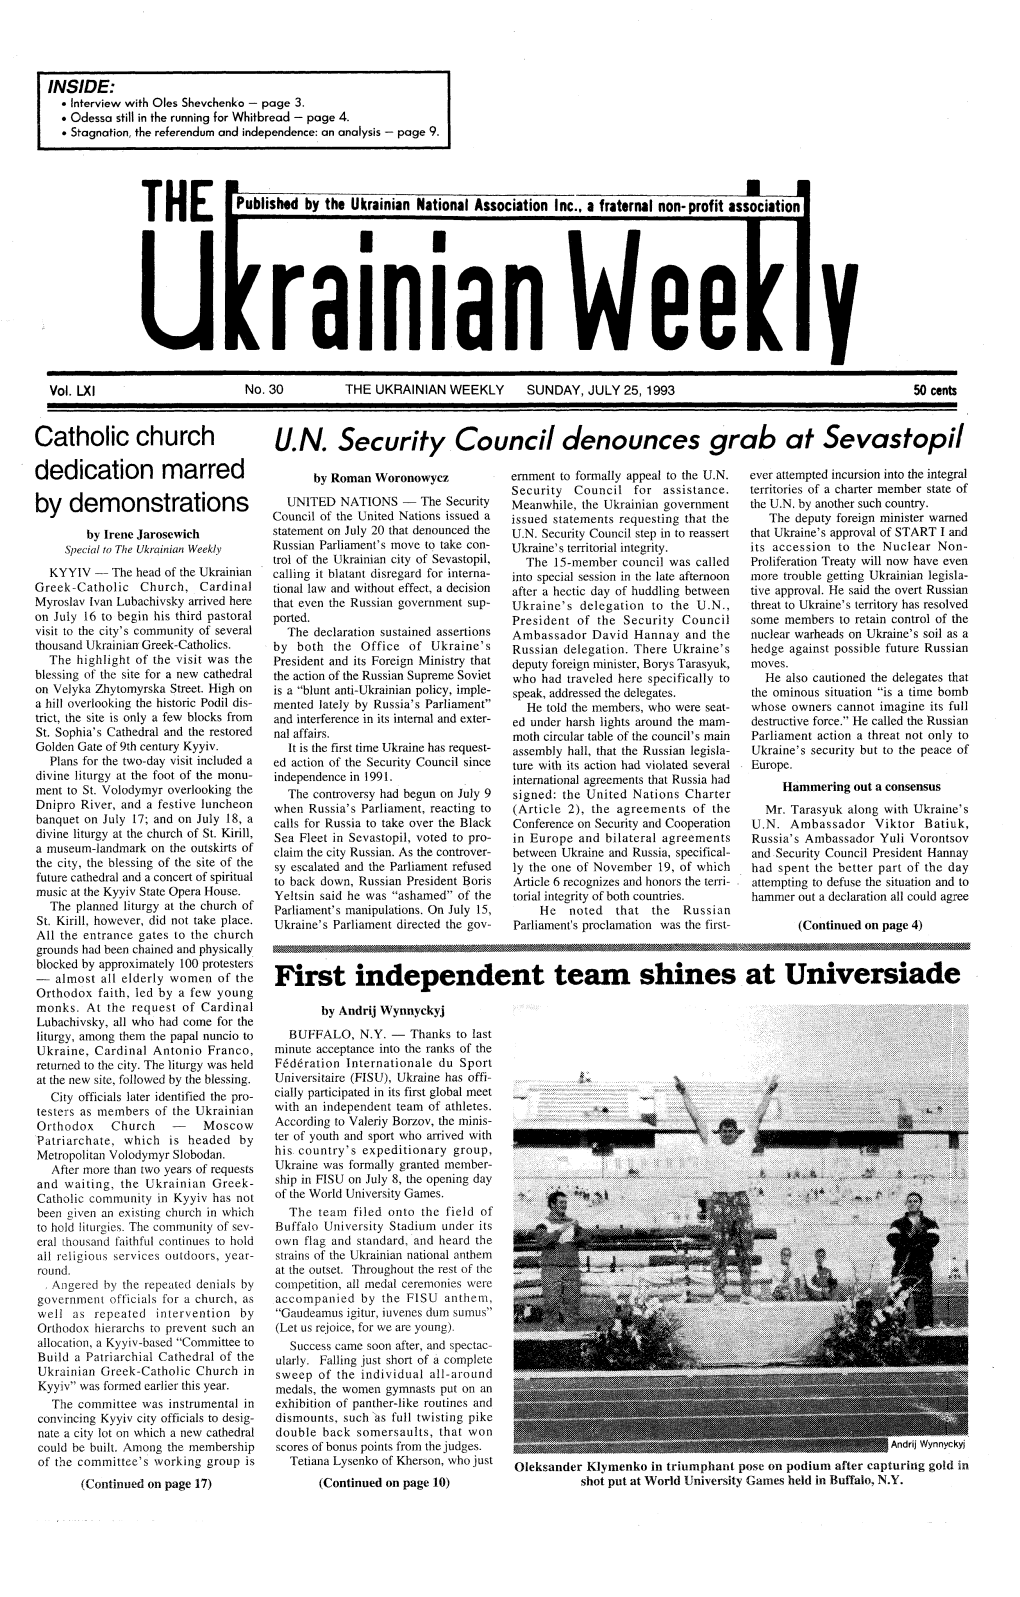 The Ukrainian Weekly 1993, No.30